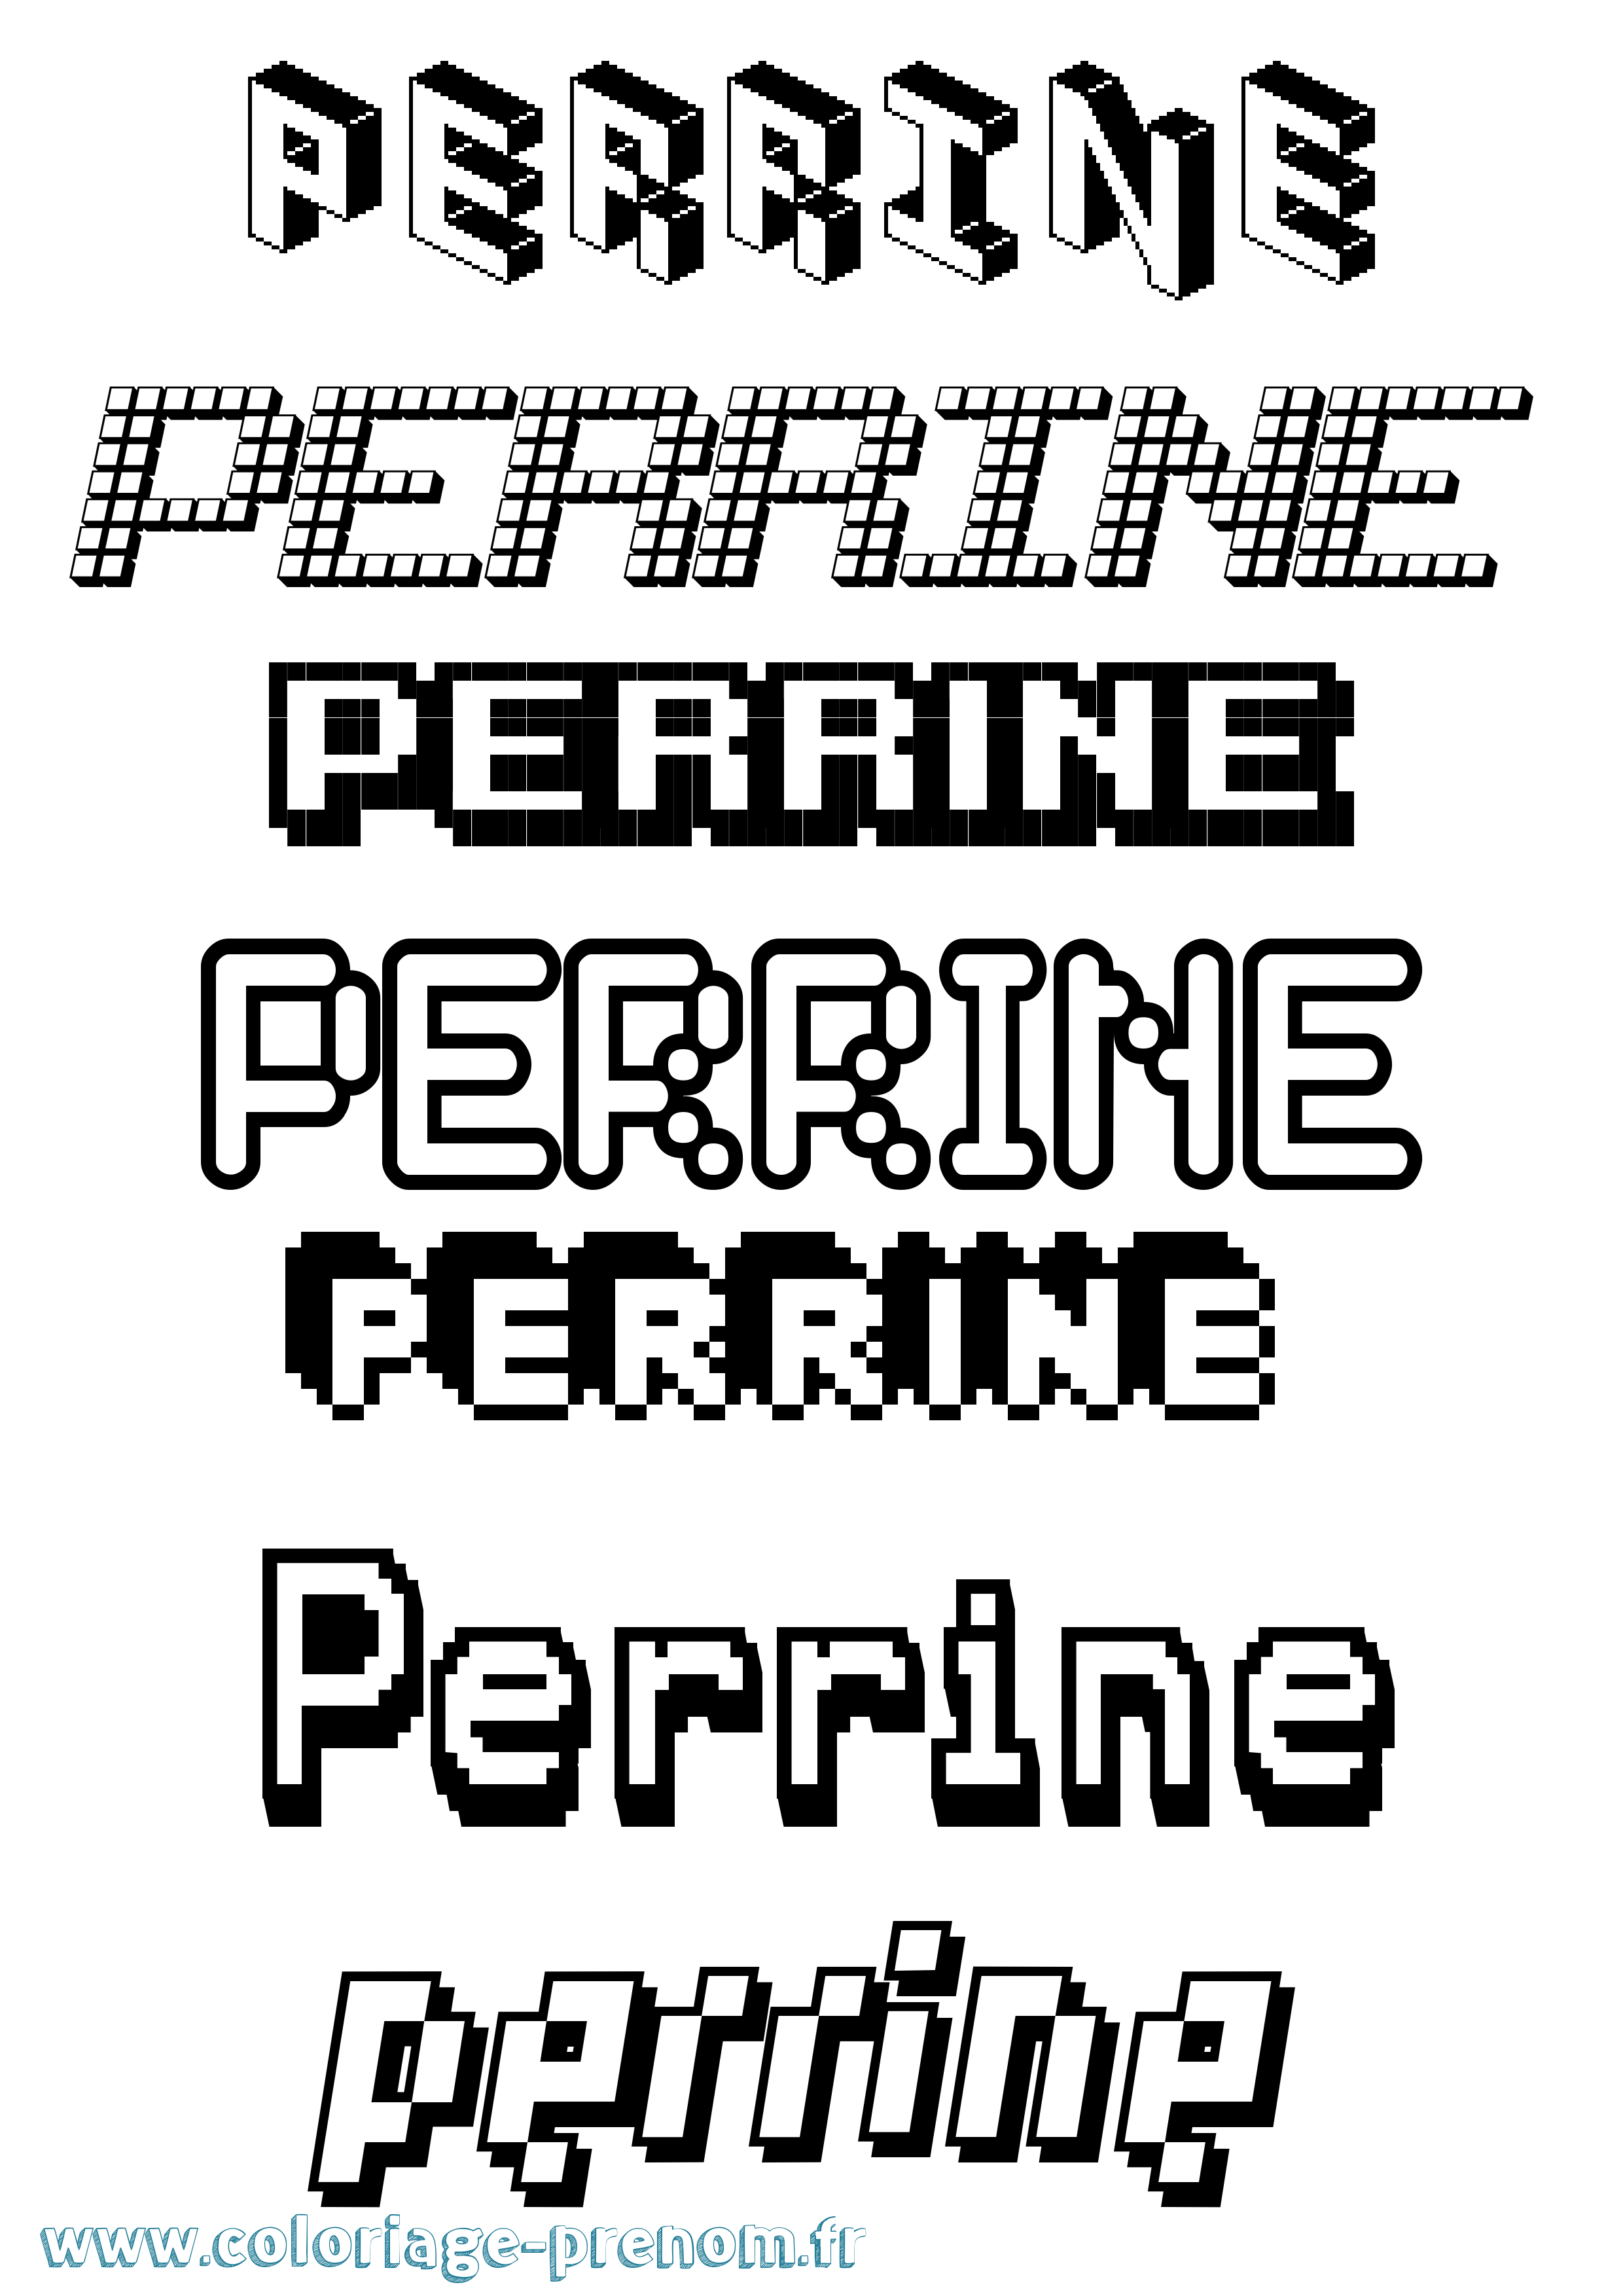 Coloriage prénom Perrine Pixel